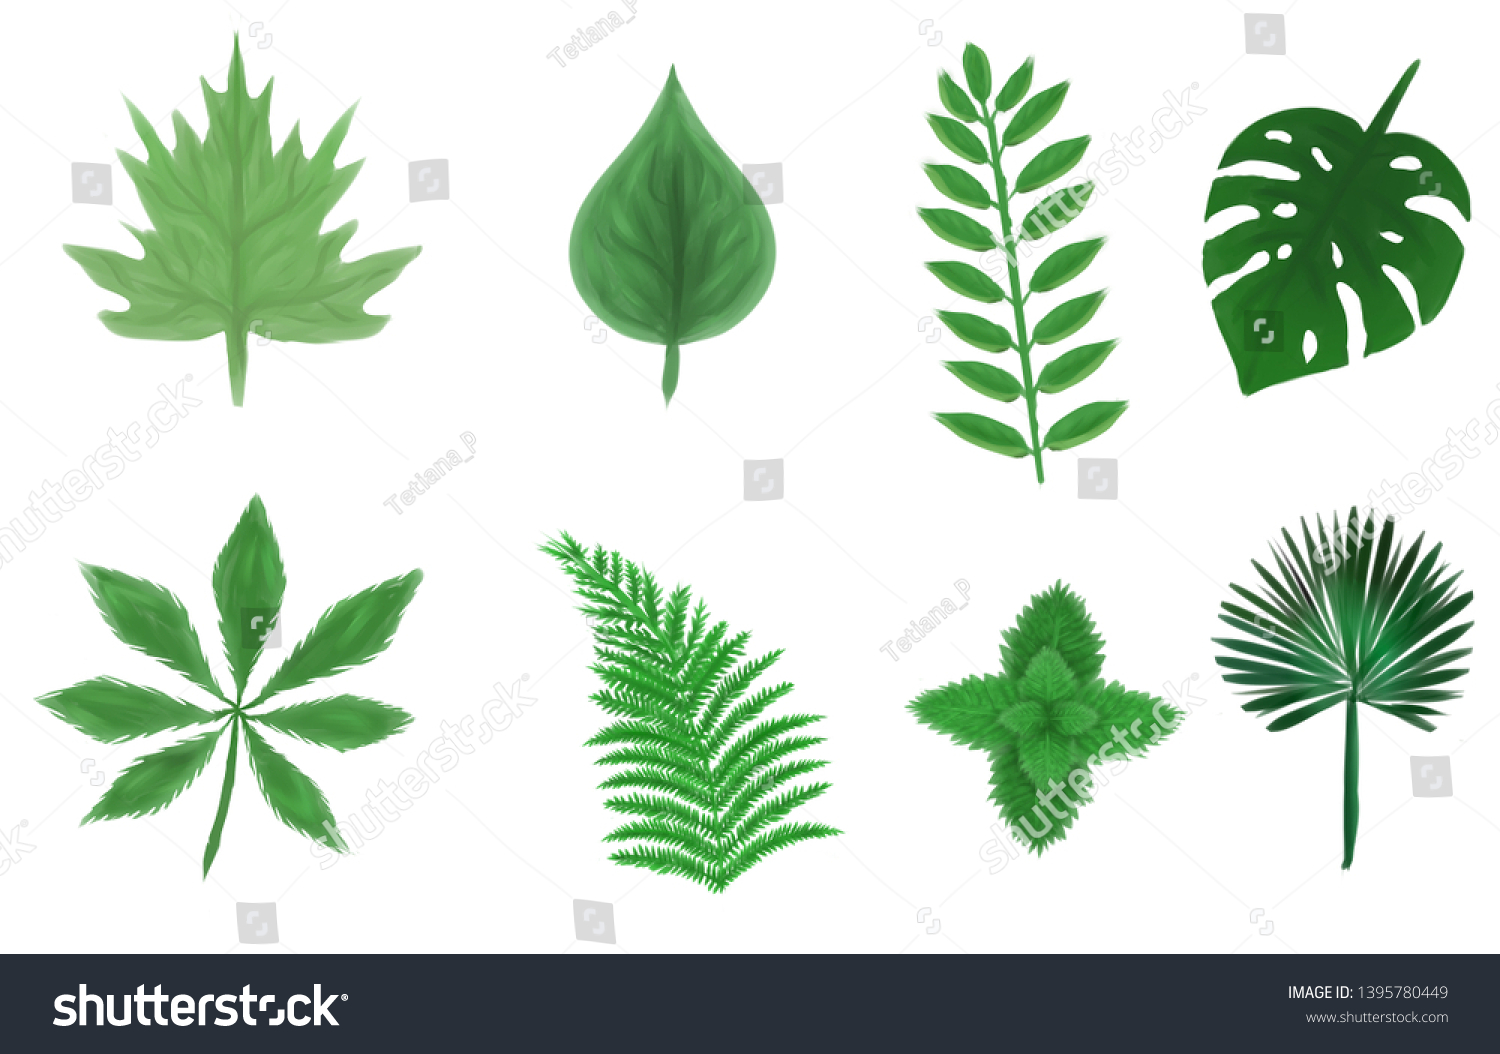 8-different-types-leaves-stock-illustration-1395780449-shutterstock